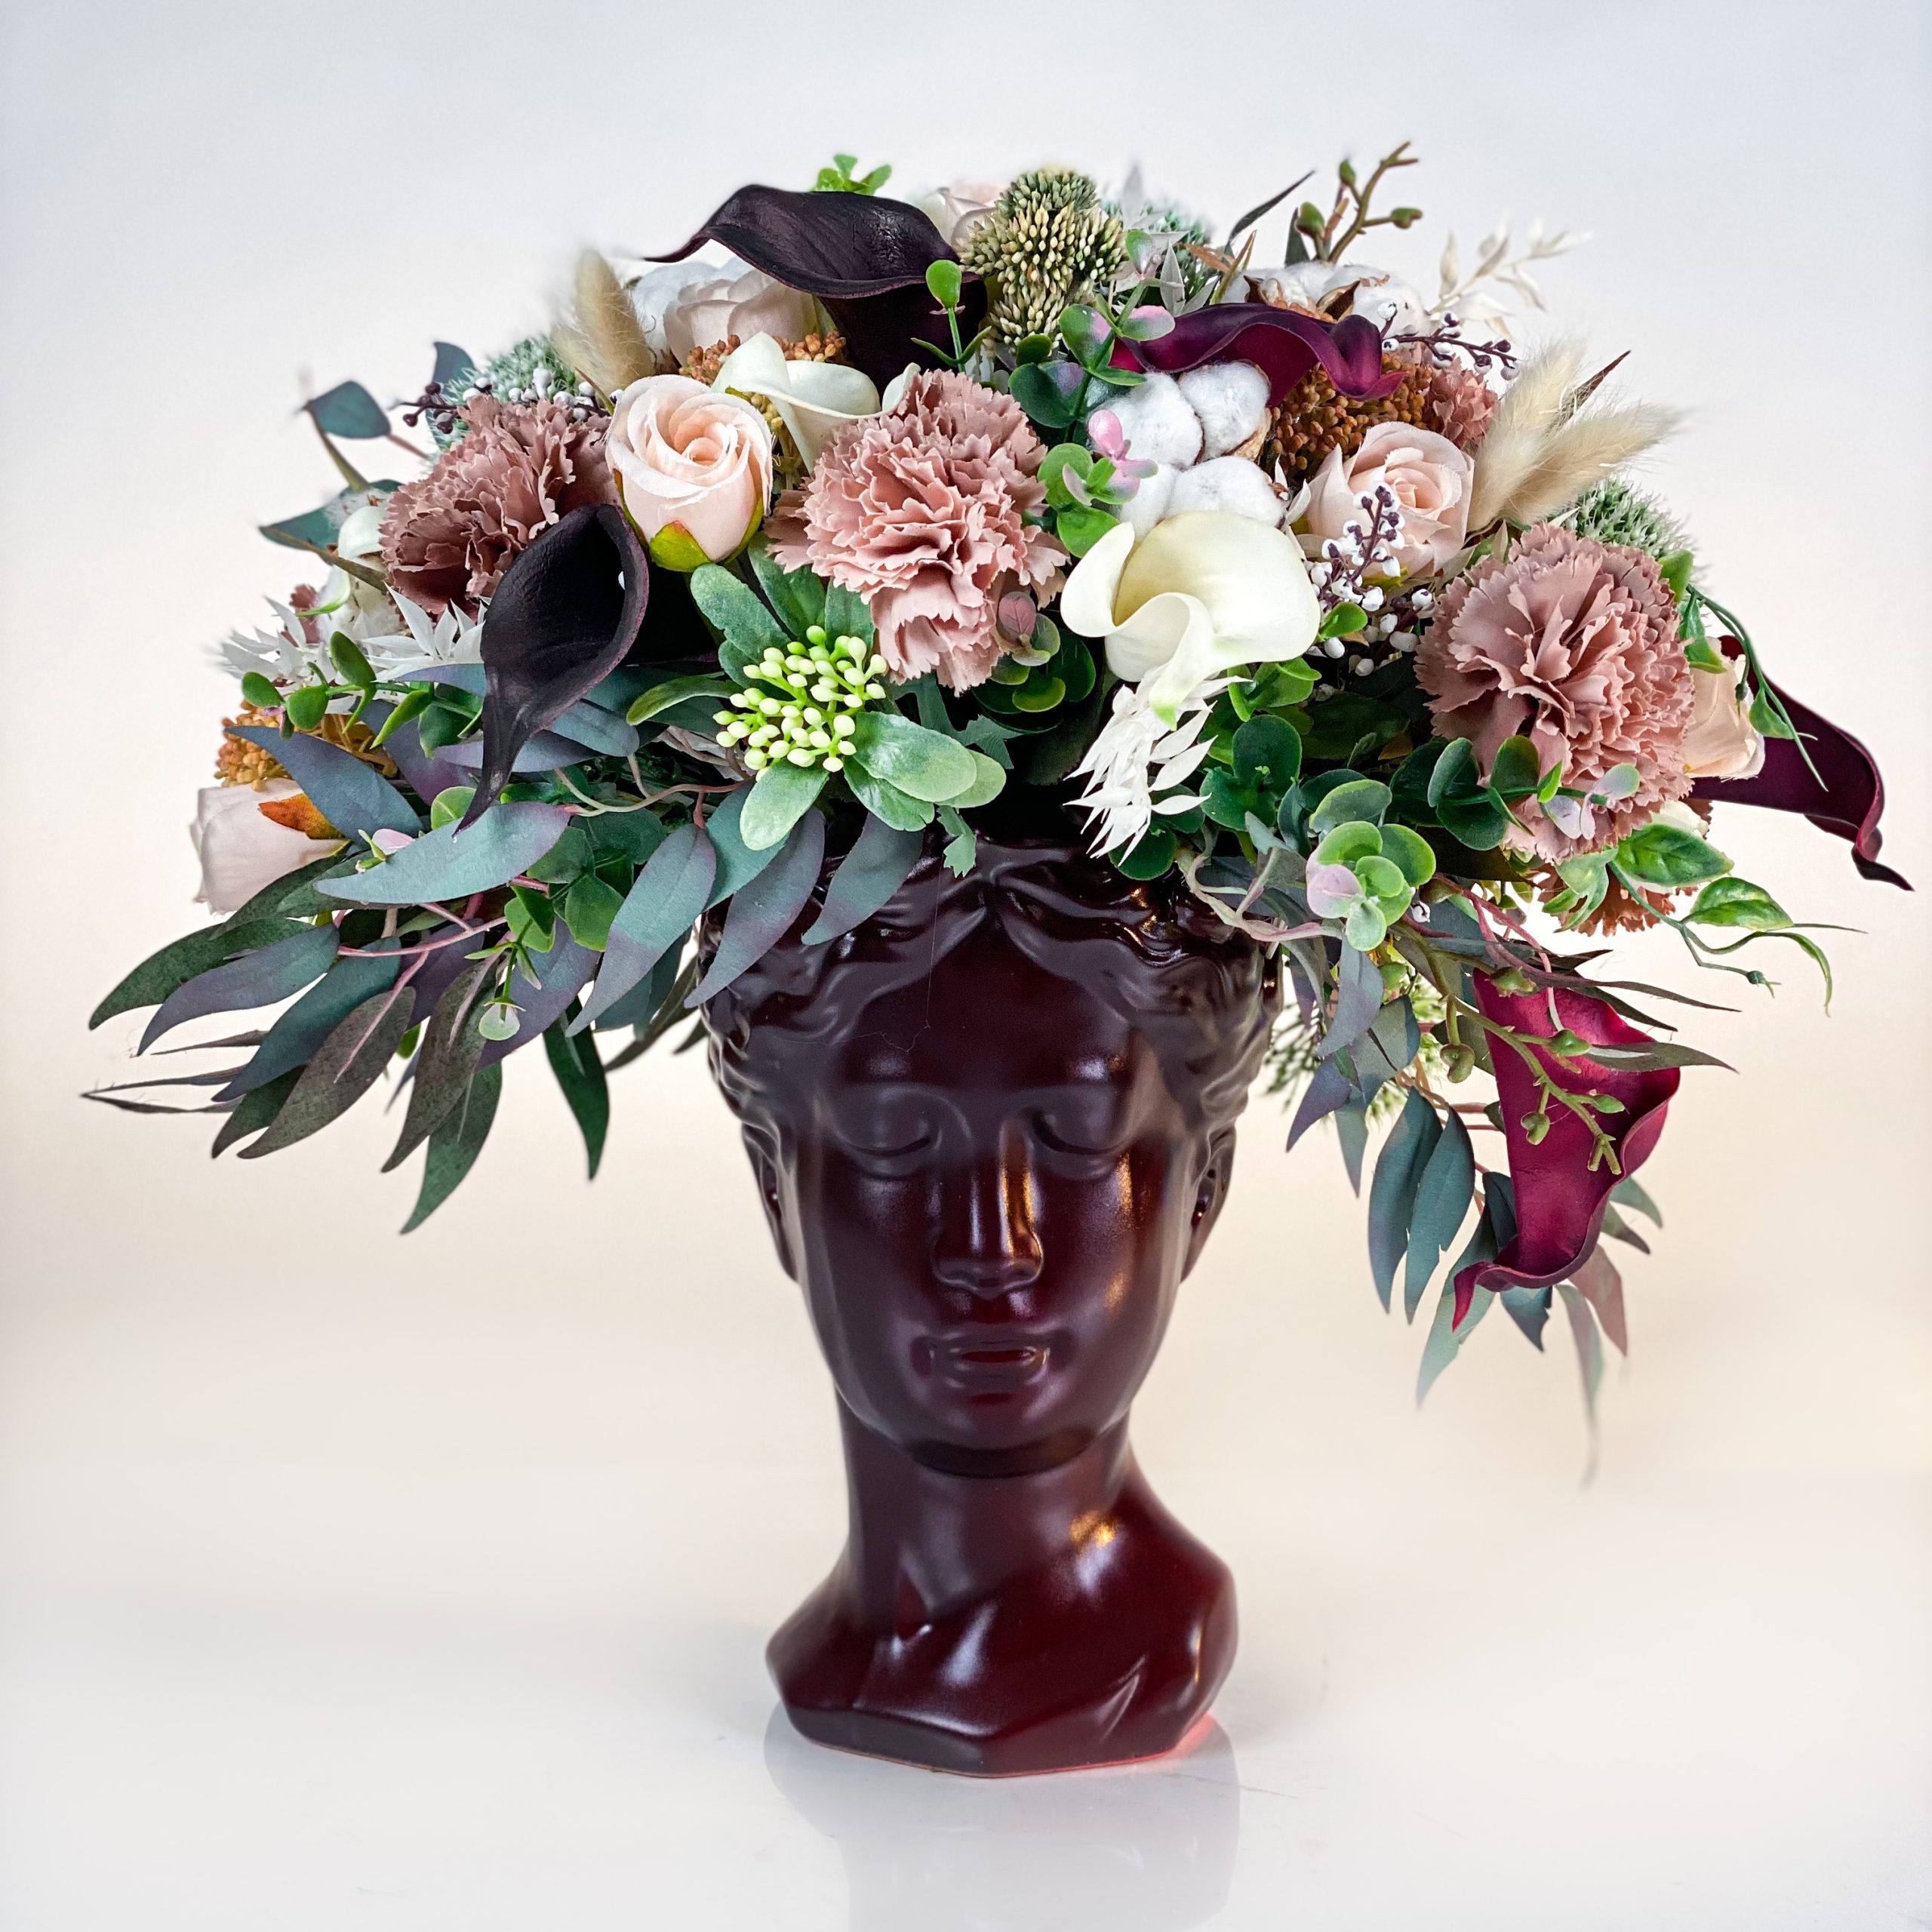 Cadou floral VENUS aranjament cu flori uscate si artificiale Cherry theme in bej burgundy si nude 1 scaled